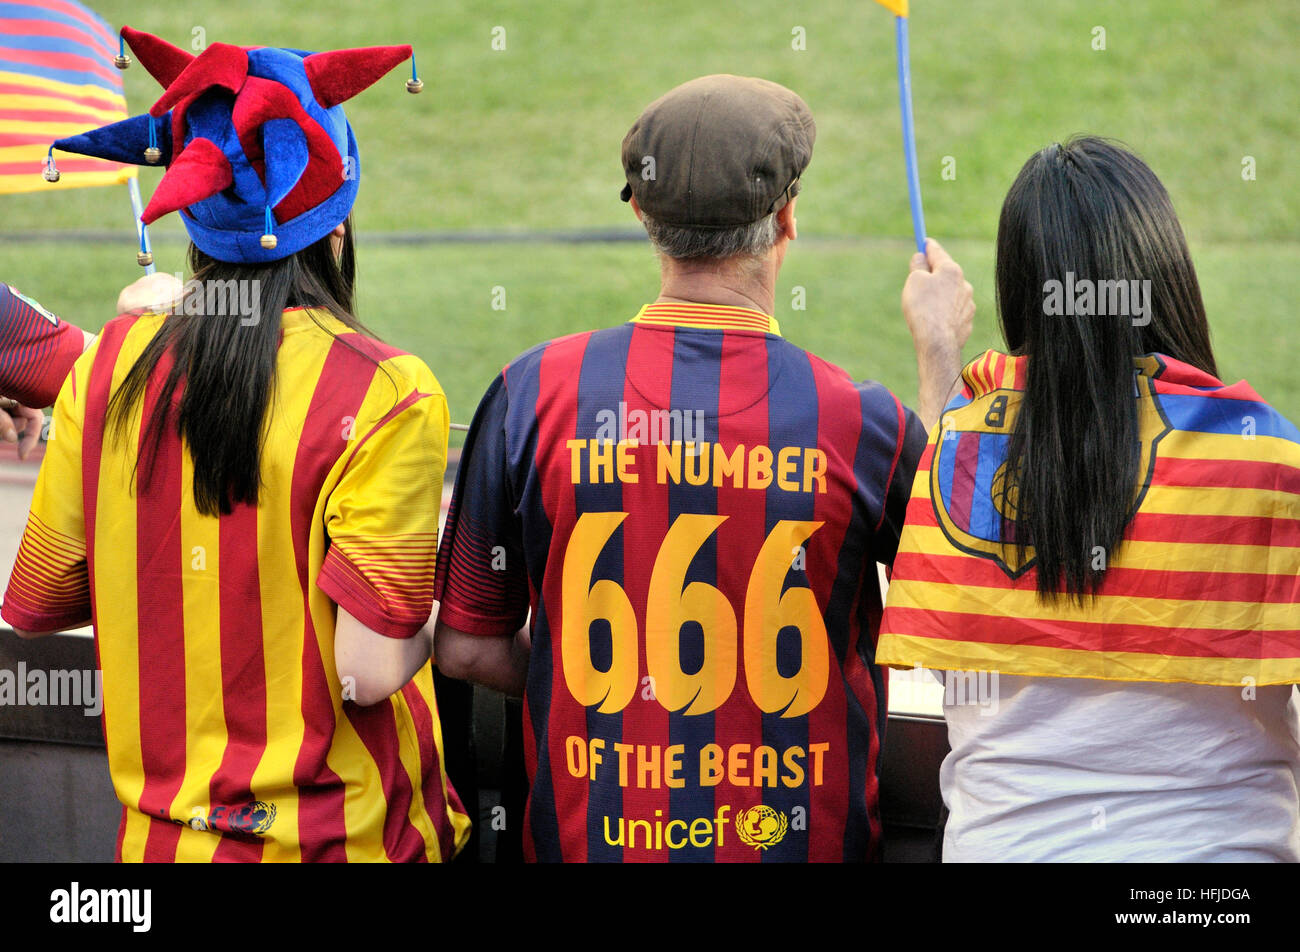 Pin by Nadya Free on Barcelona ♥  Louis vuitton, Football, Sports jersey